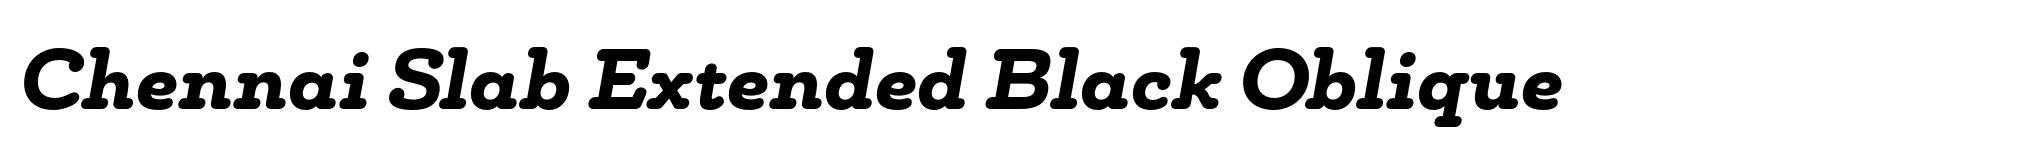 Chennai Slab Extended Black Oblique image